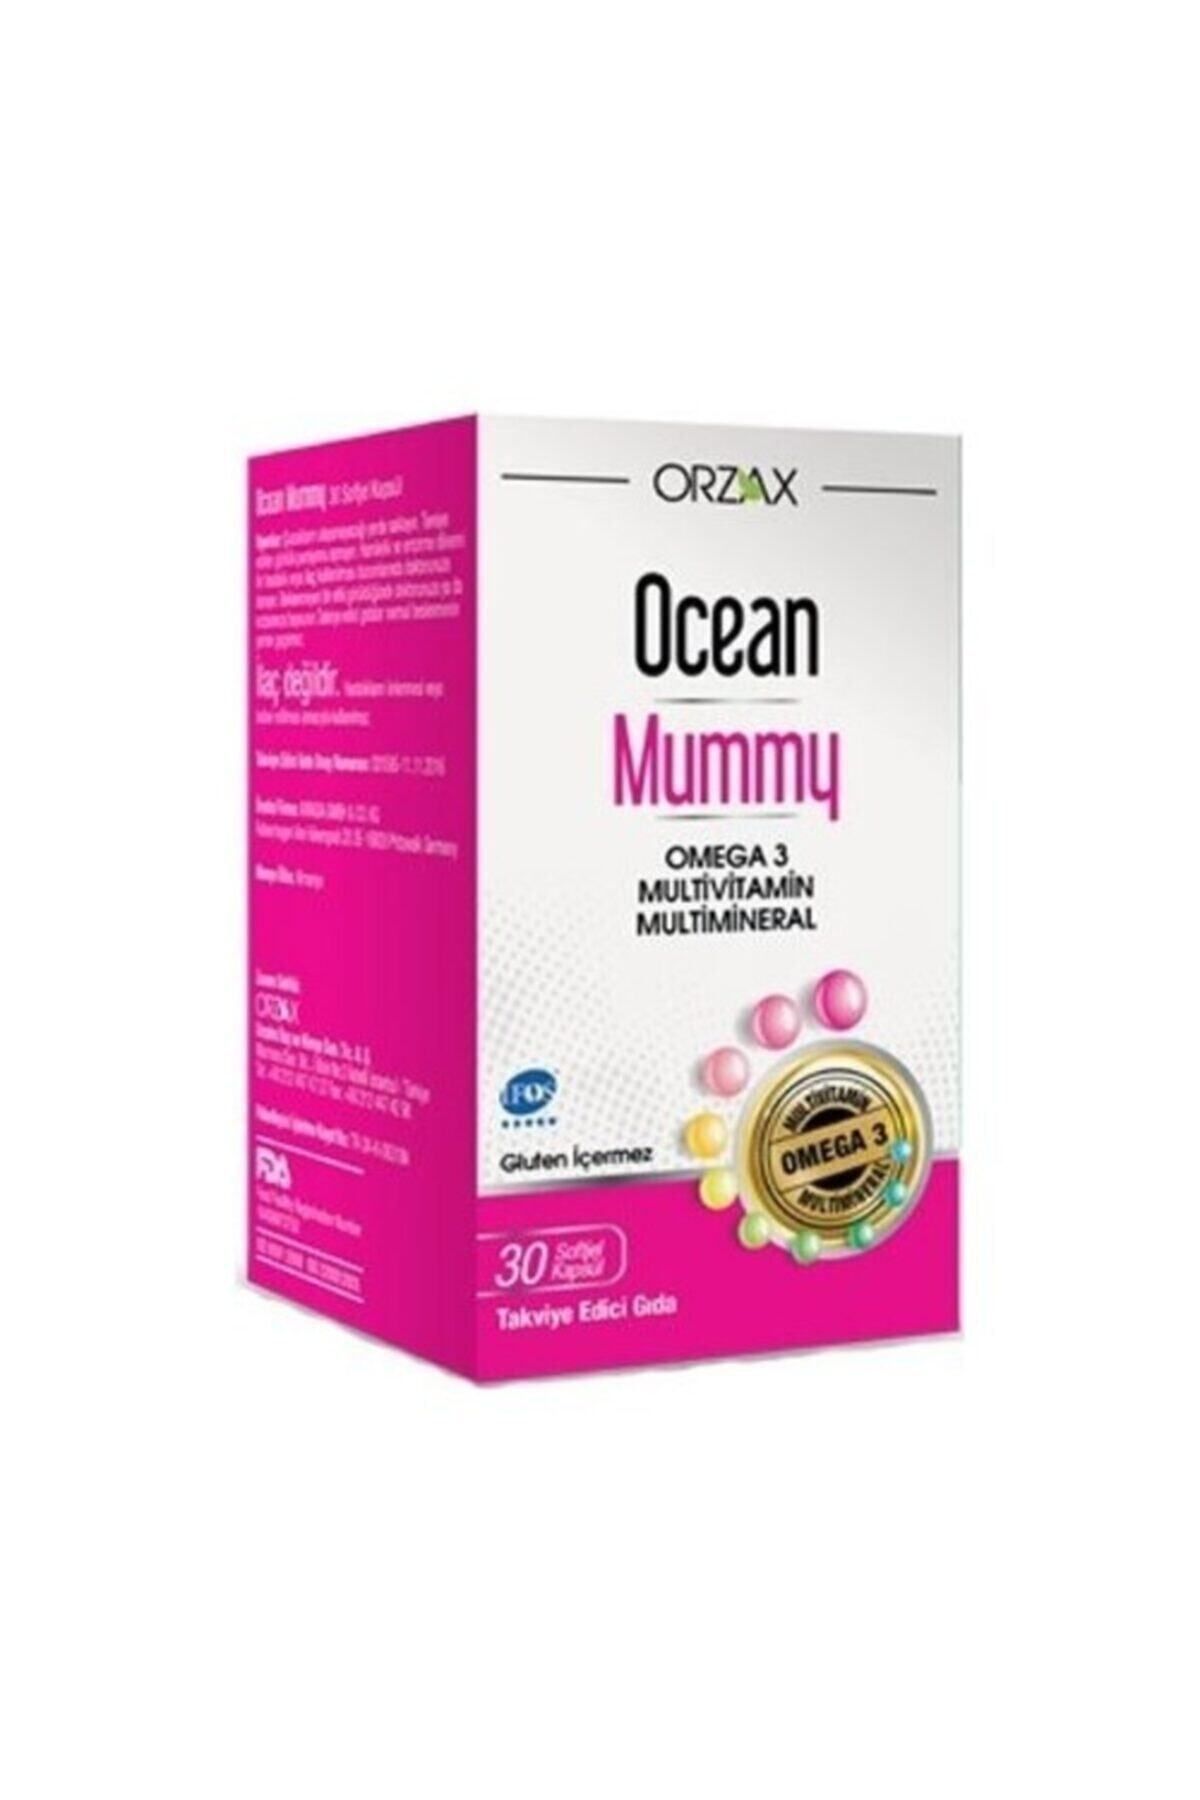 Ocean Ocean Mummy 30 Kapsul